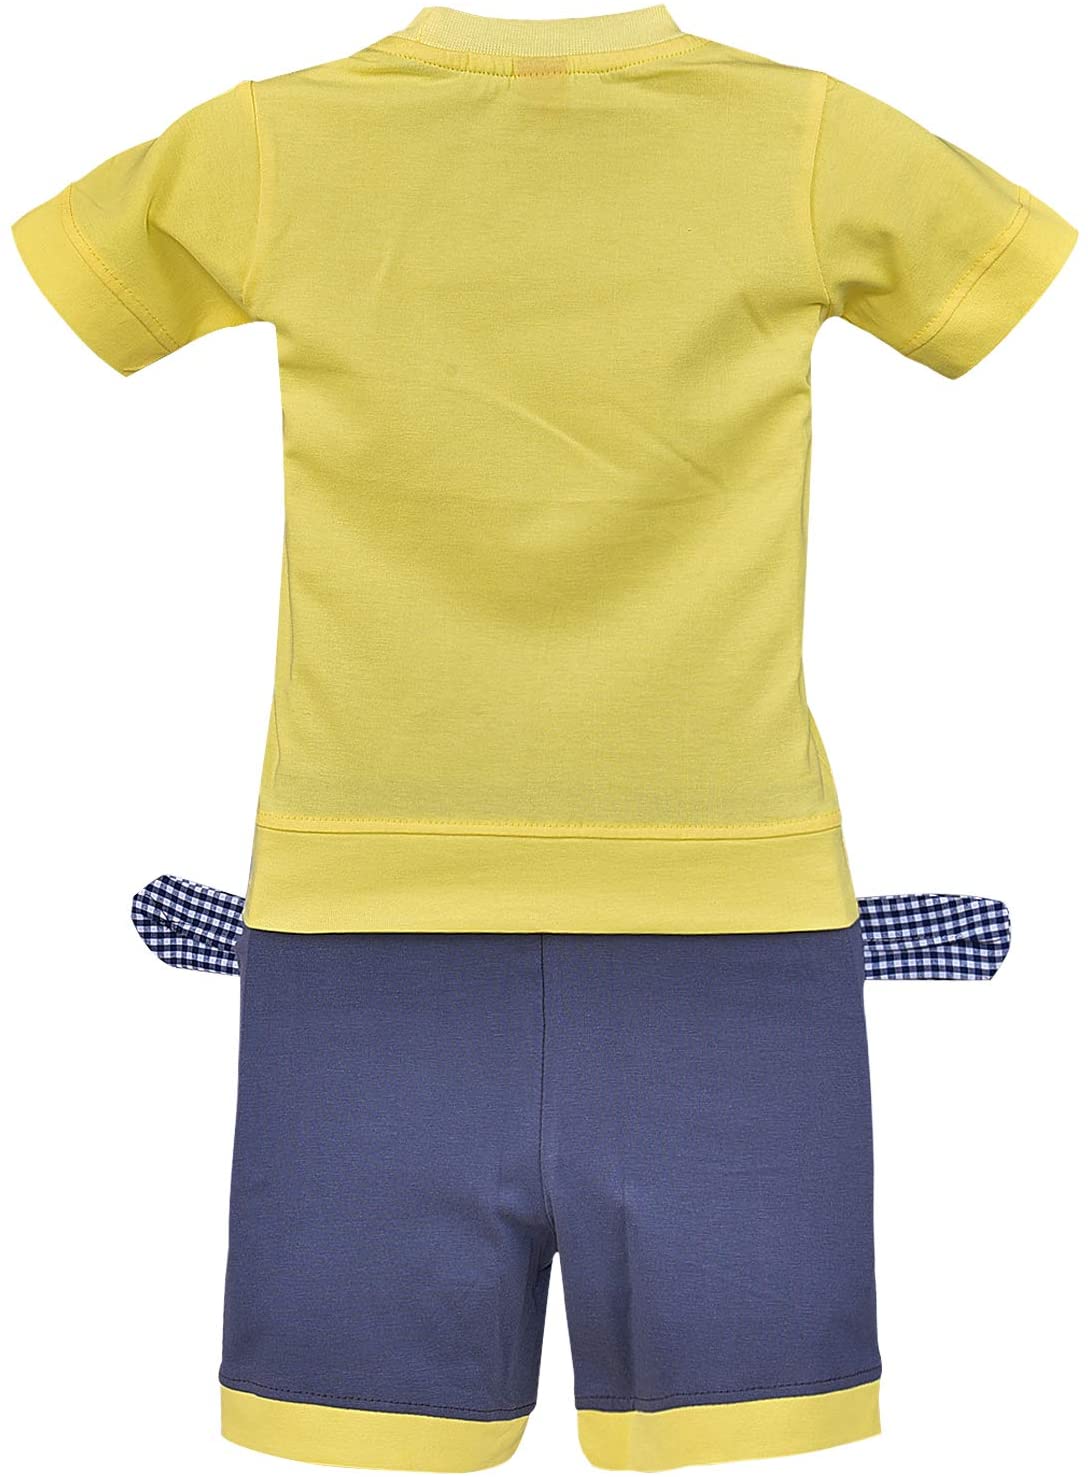 Wish Karo Unisex Clothing Sets for Baby Girls - Boys-(bt26y)